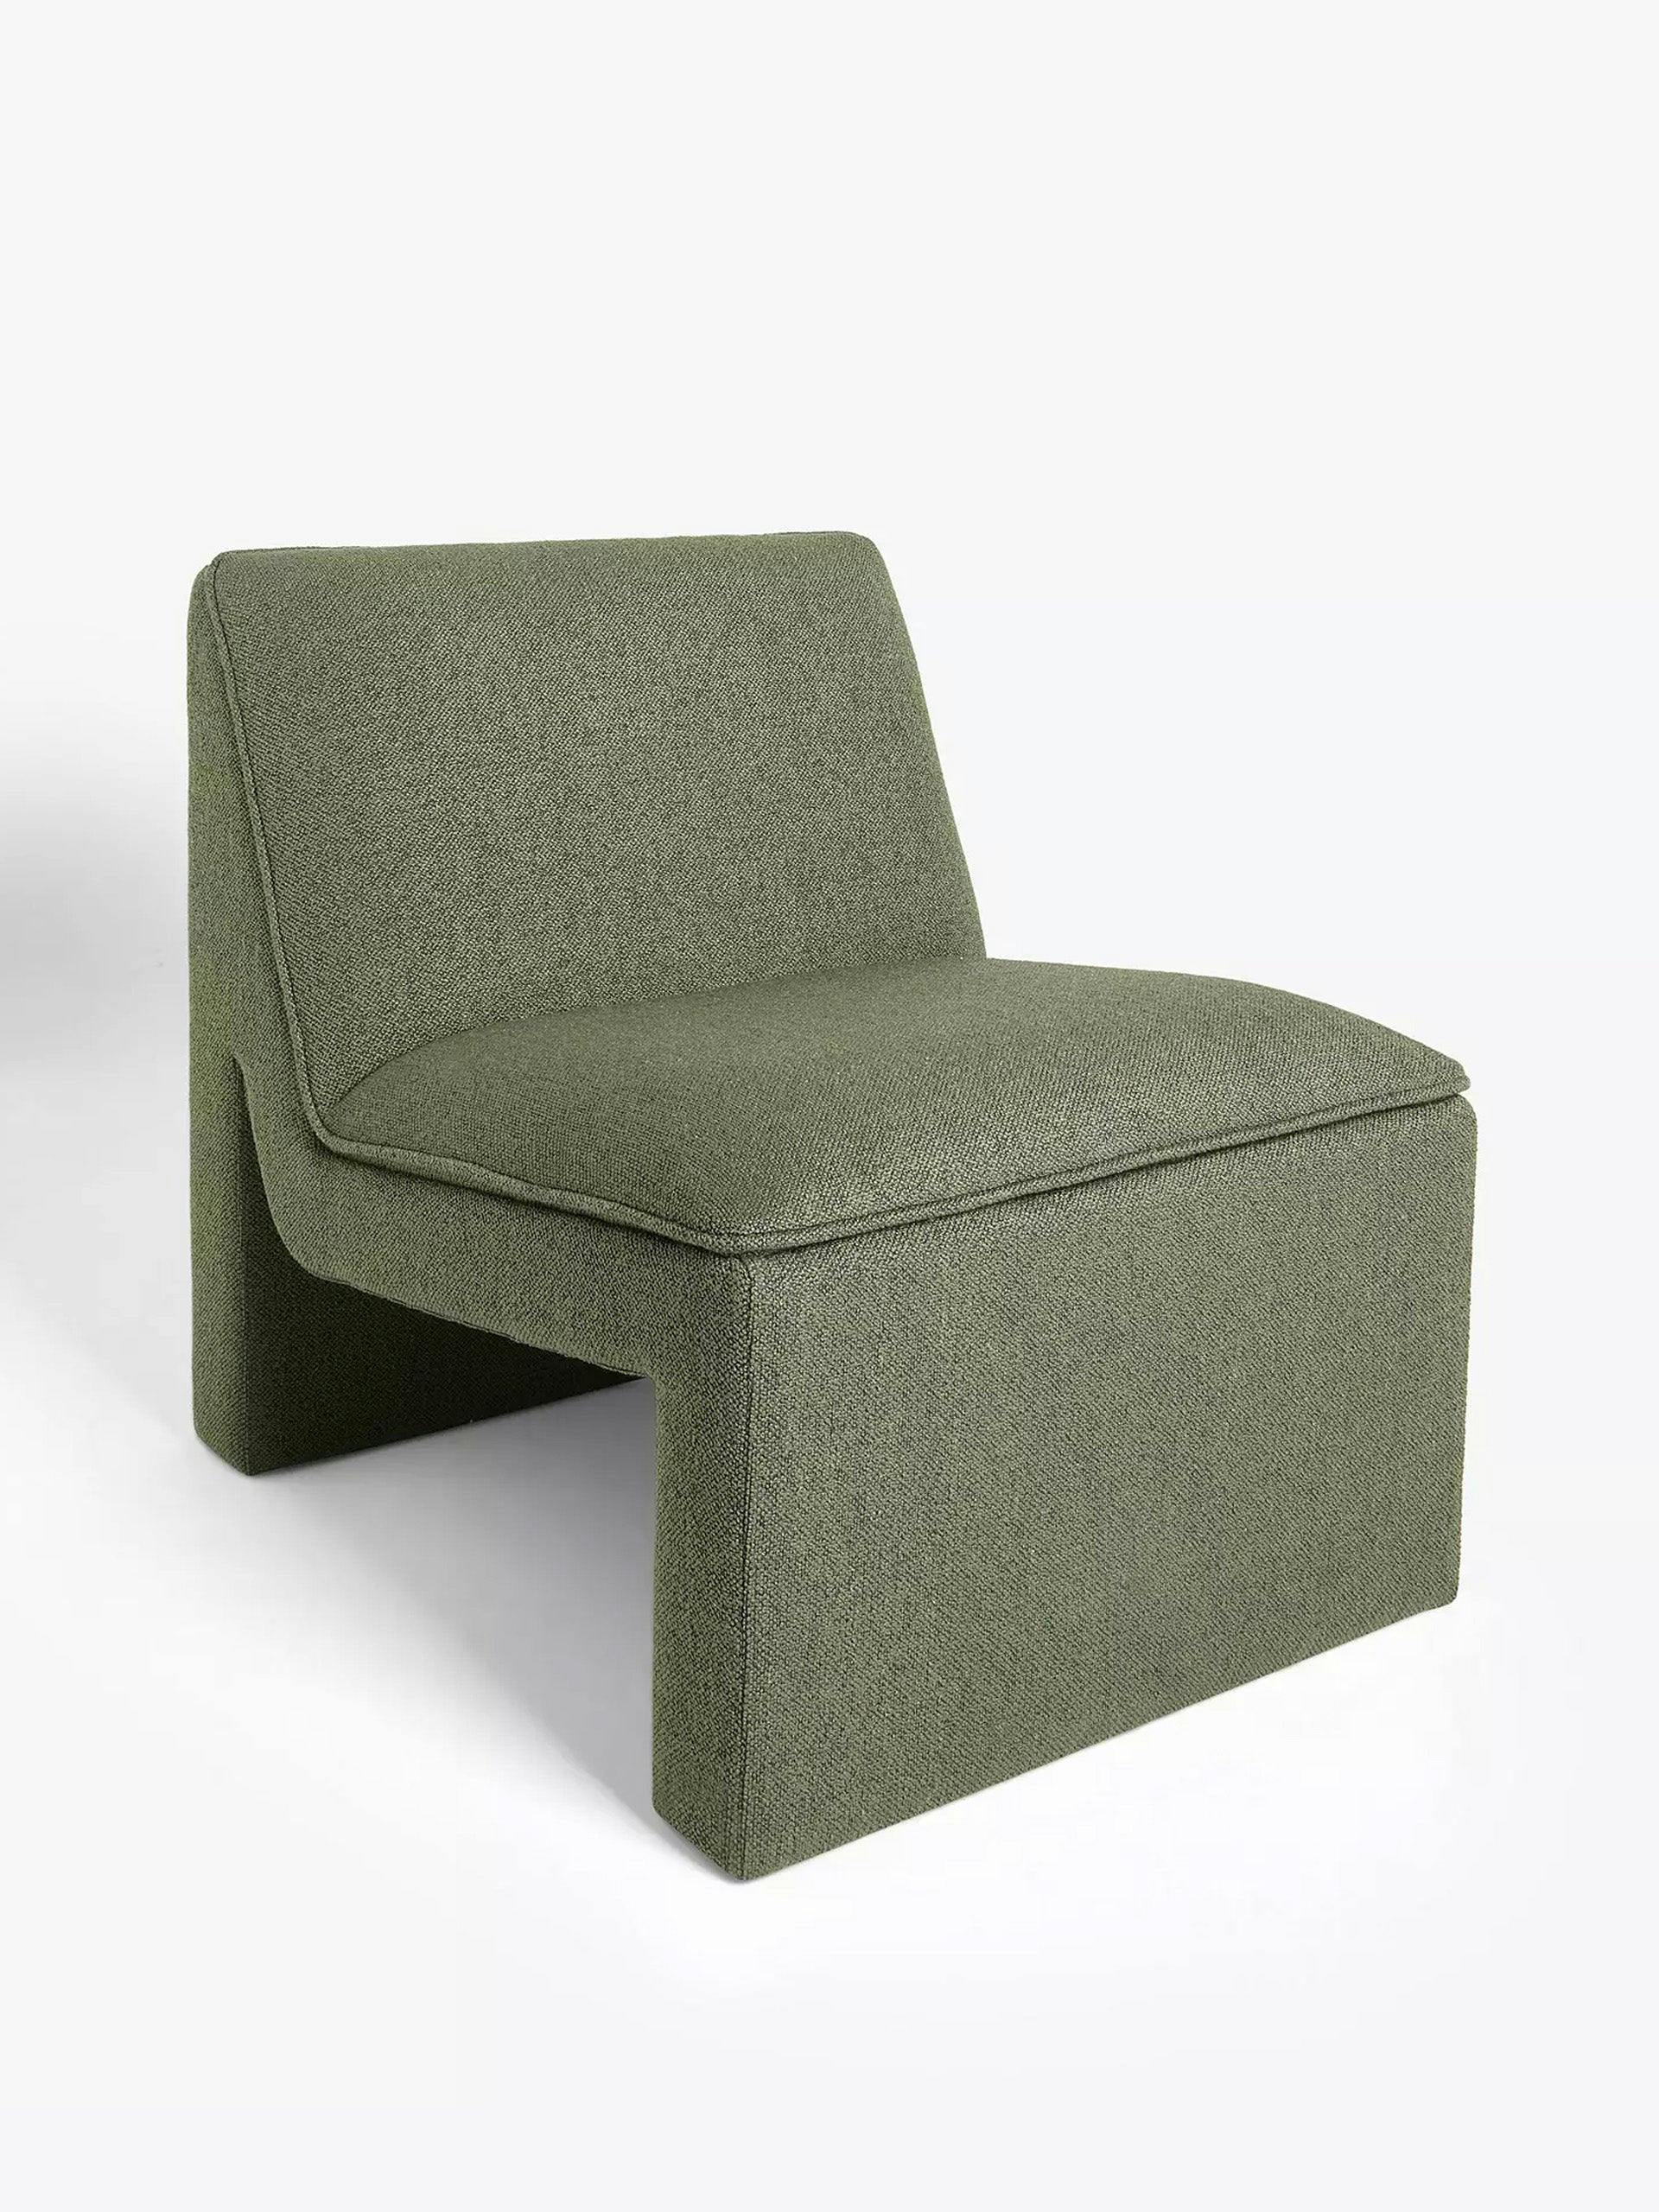 Perk lounge chair